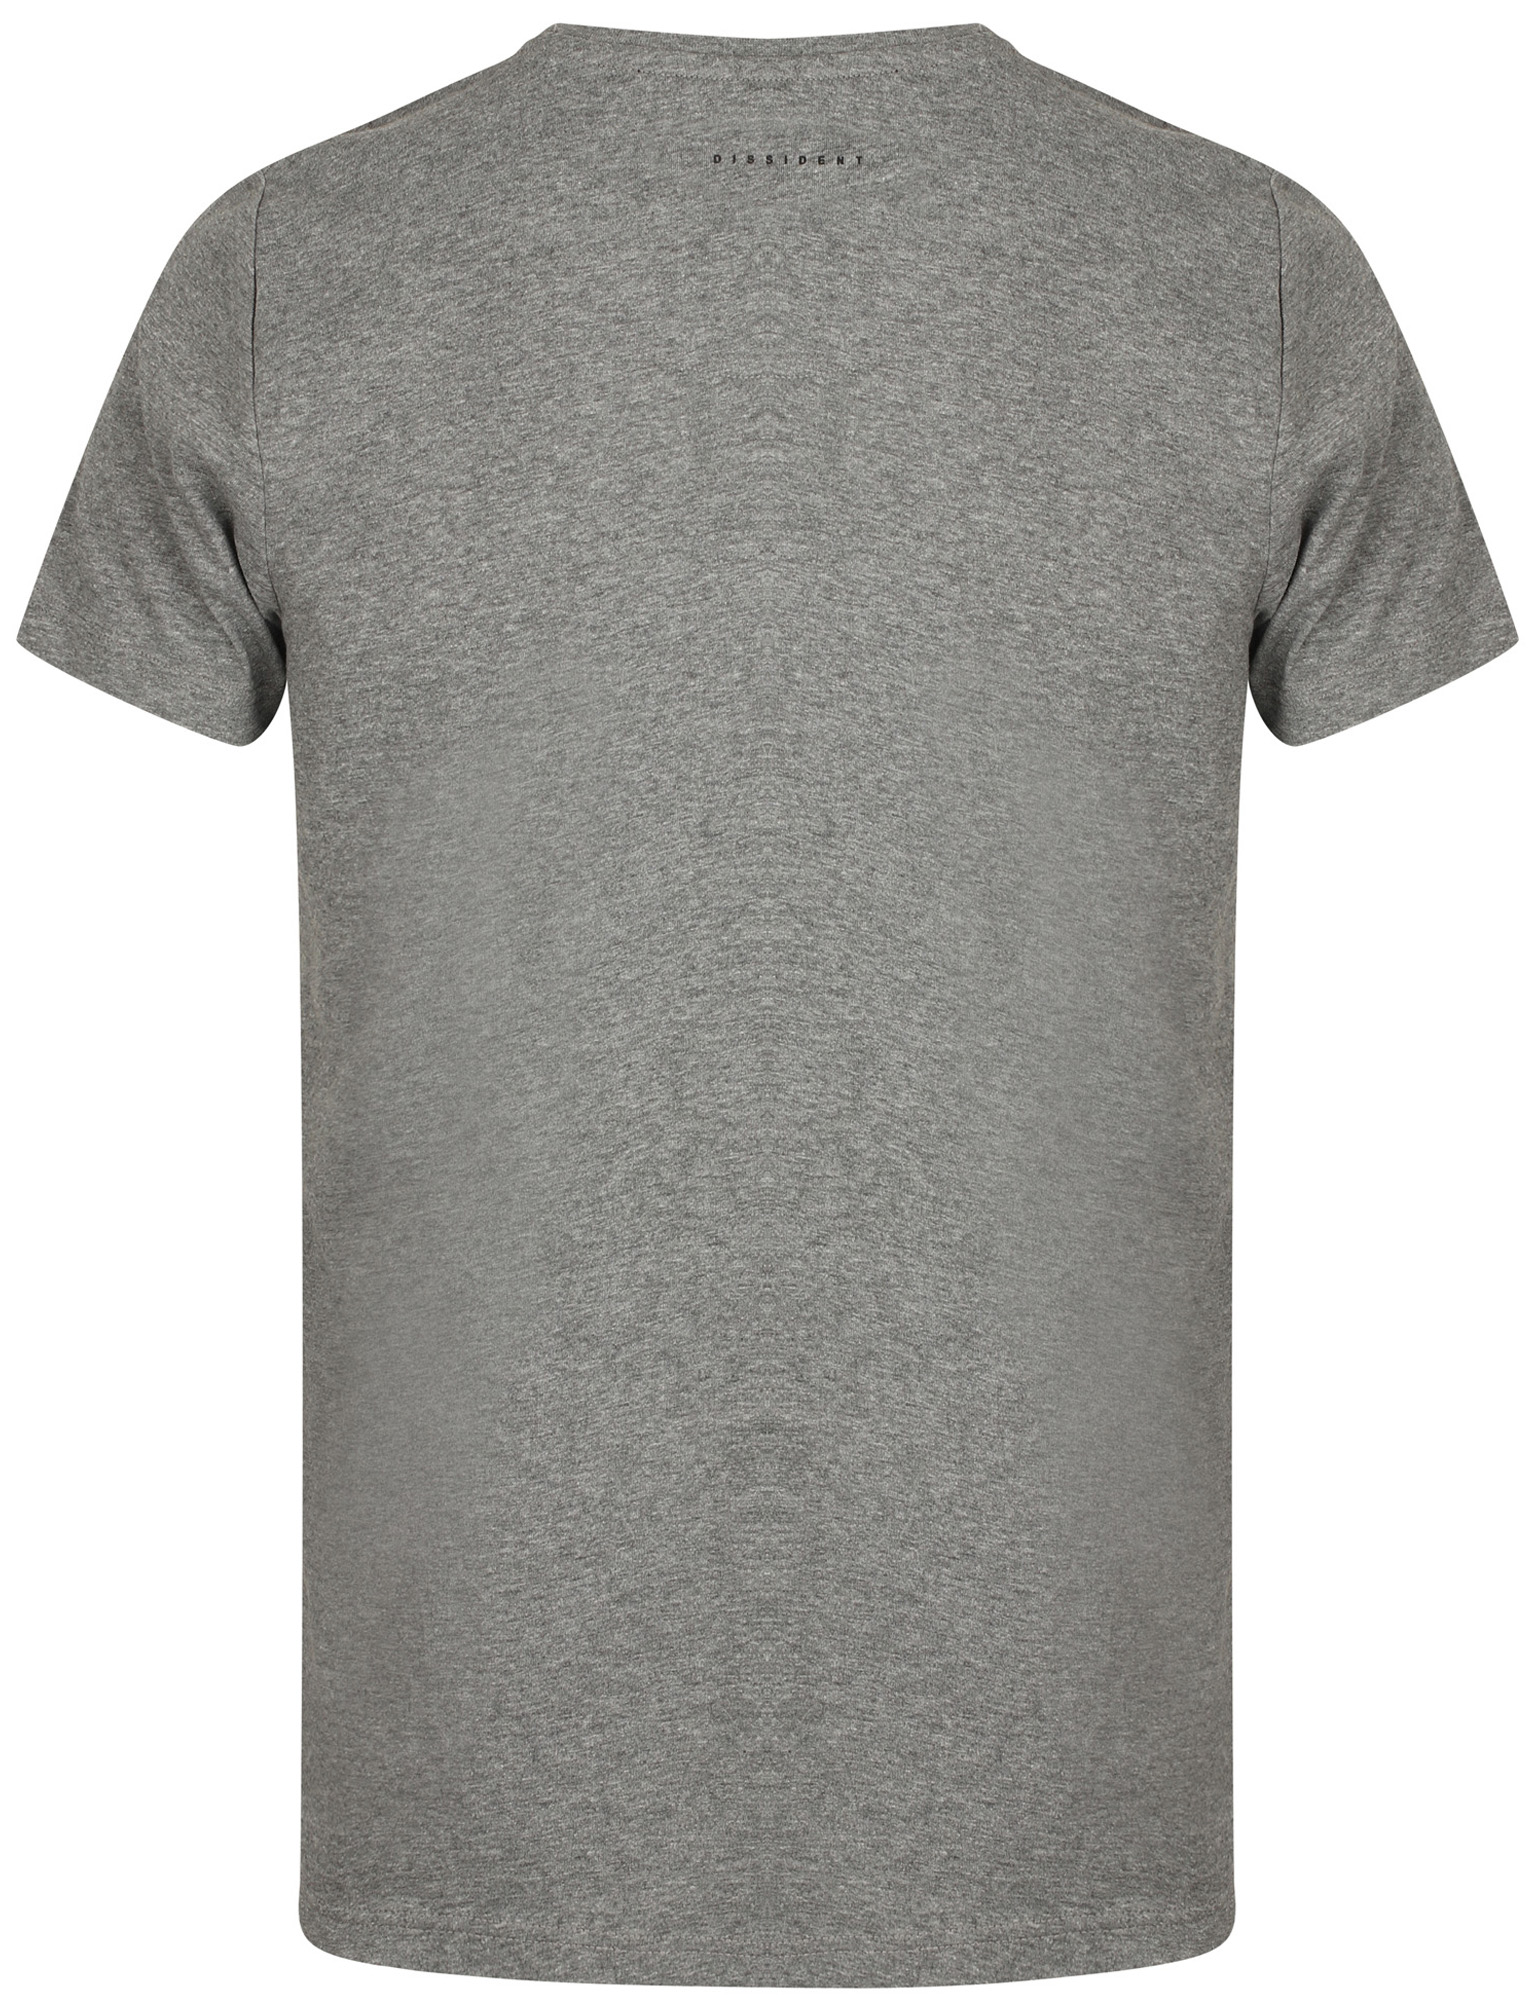 Dissident Lukin Crew Neck T-Shirt Plain Waffle Knit Texture Top Size S